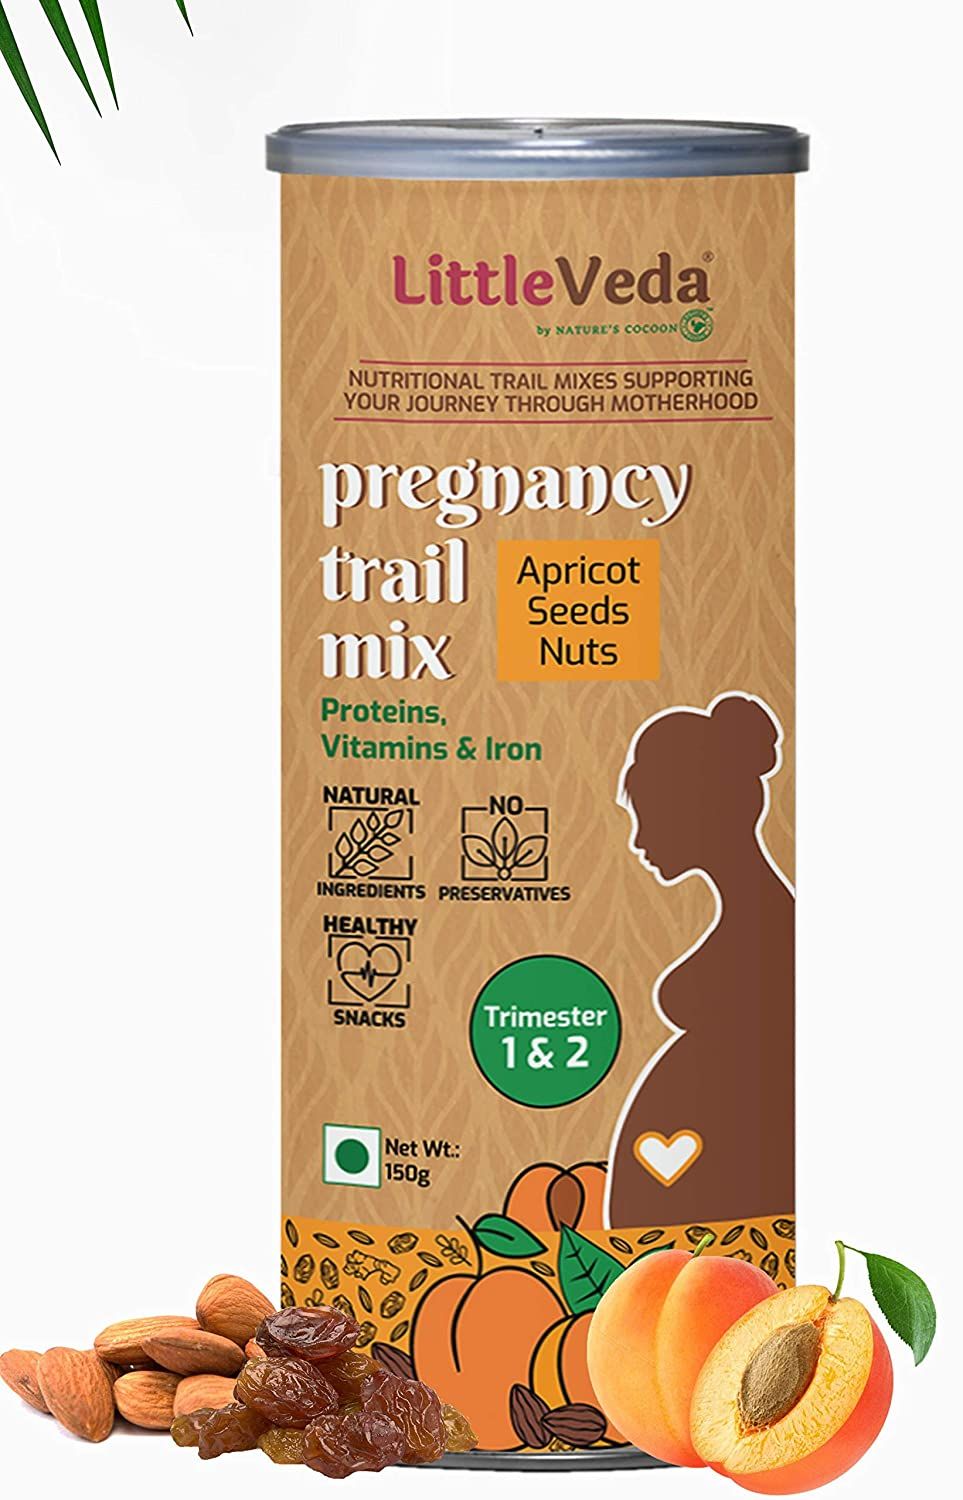 LittleVeda Pregnancy Trail Mix Image